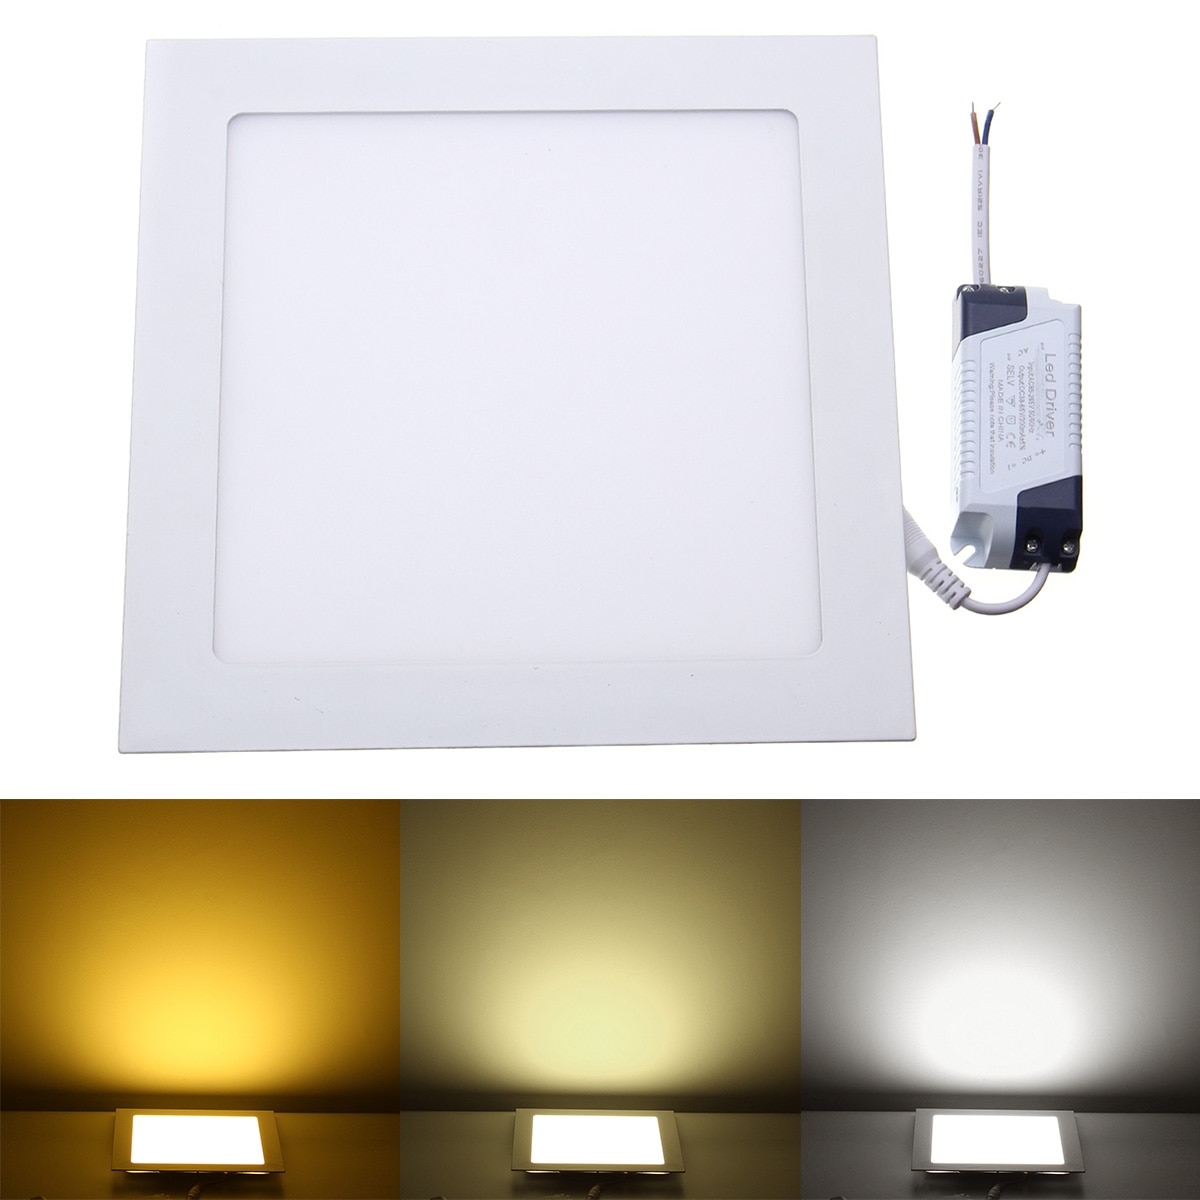 20W Vierkante Led Panel Licht Verzonken Keuken Badkamer Plafondlamp AC85-265V Led Downlight Warm Wit/Koel Wit/natuurlijk Licht